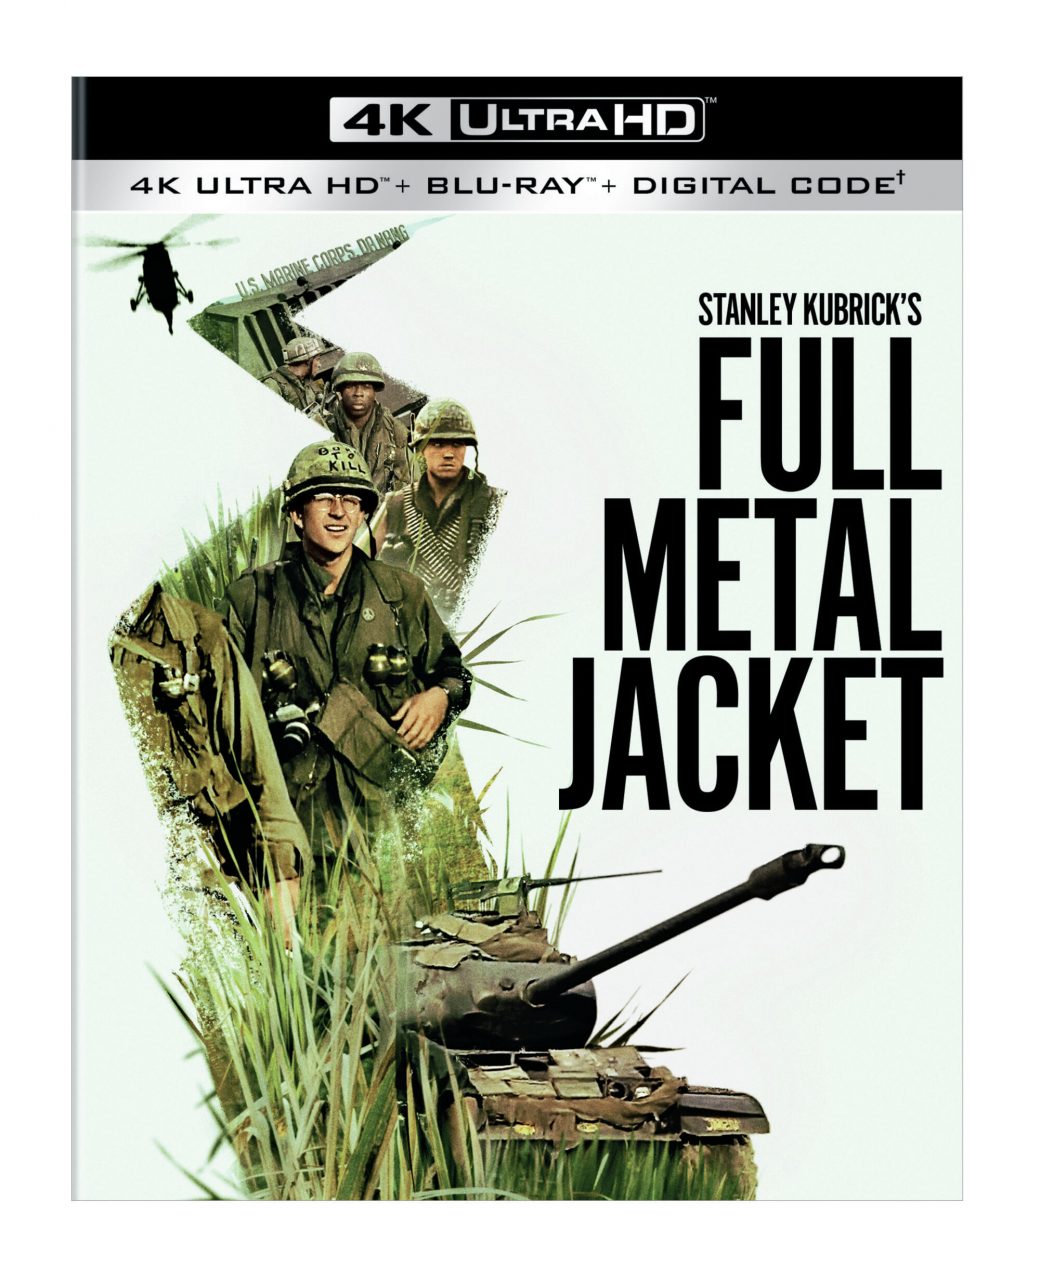 Full Metal Jacket 4K Ultra HD cover (Warner Bros. Home Entertainment)